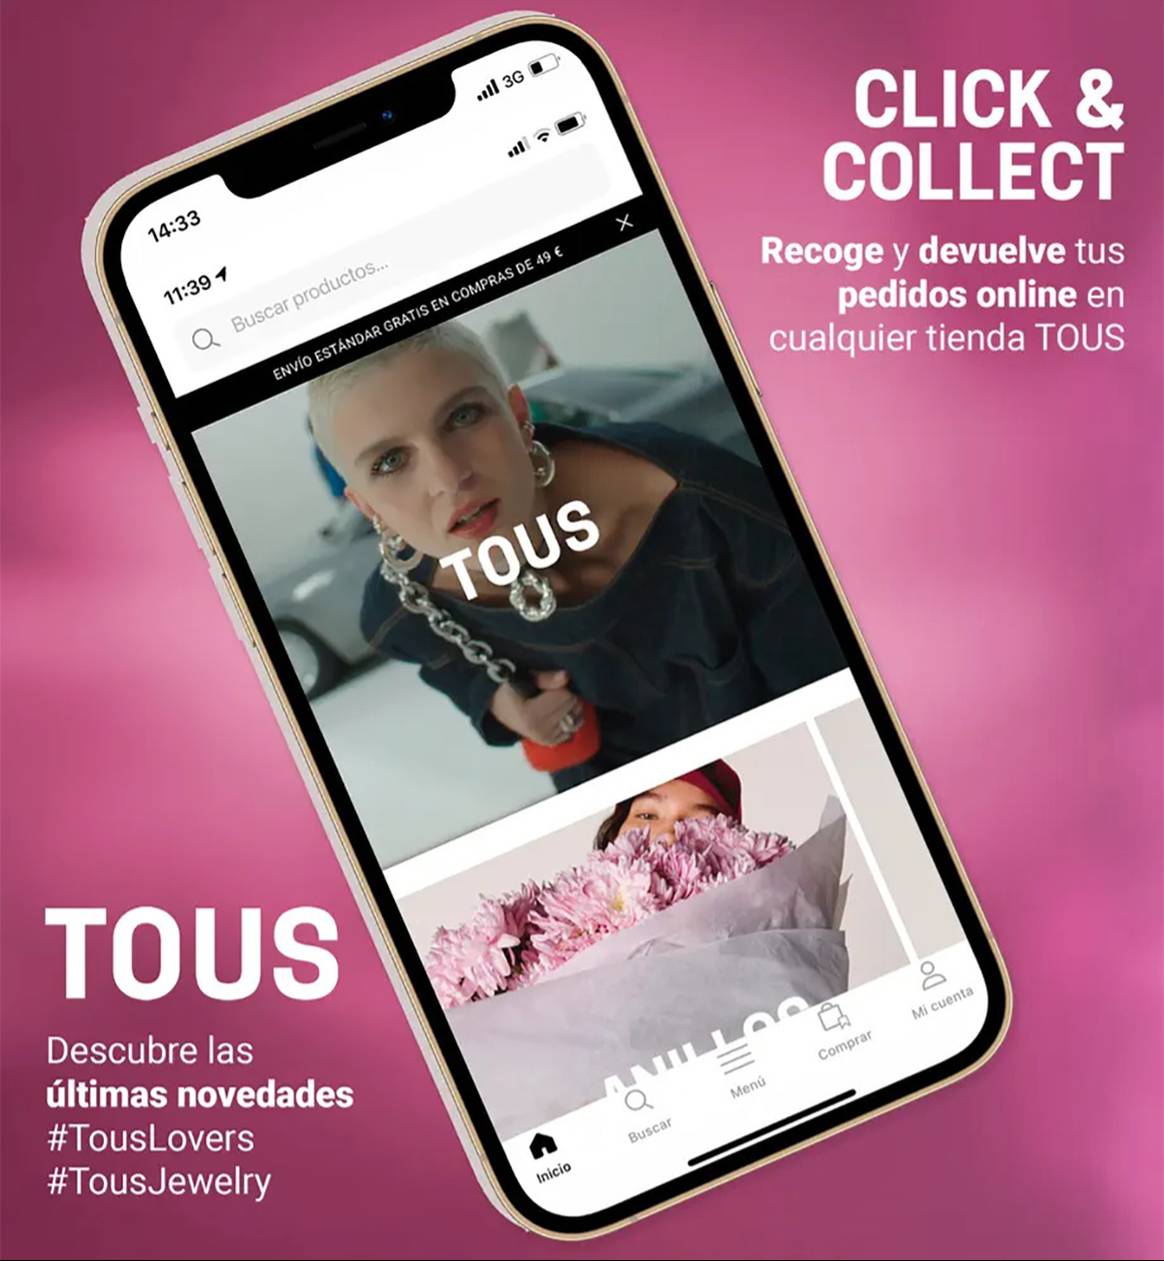 Photo Credits: Front-end de la nueva App móvil de Tous. App Store.